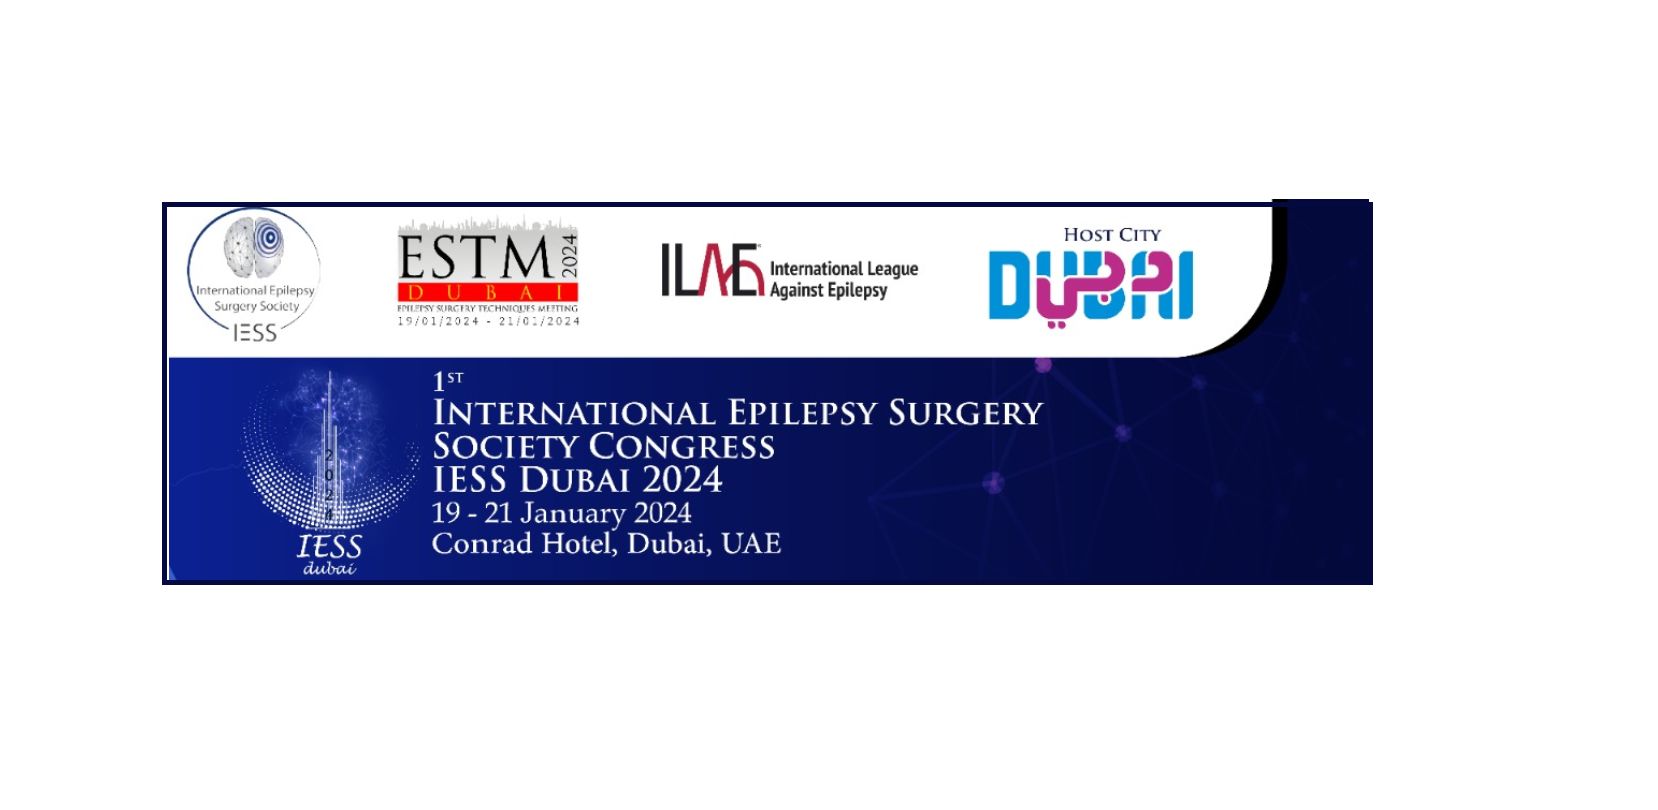 The International Epilepsy Surgery Society Congress